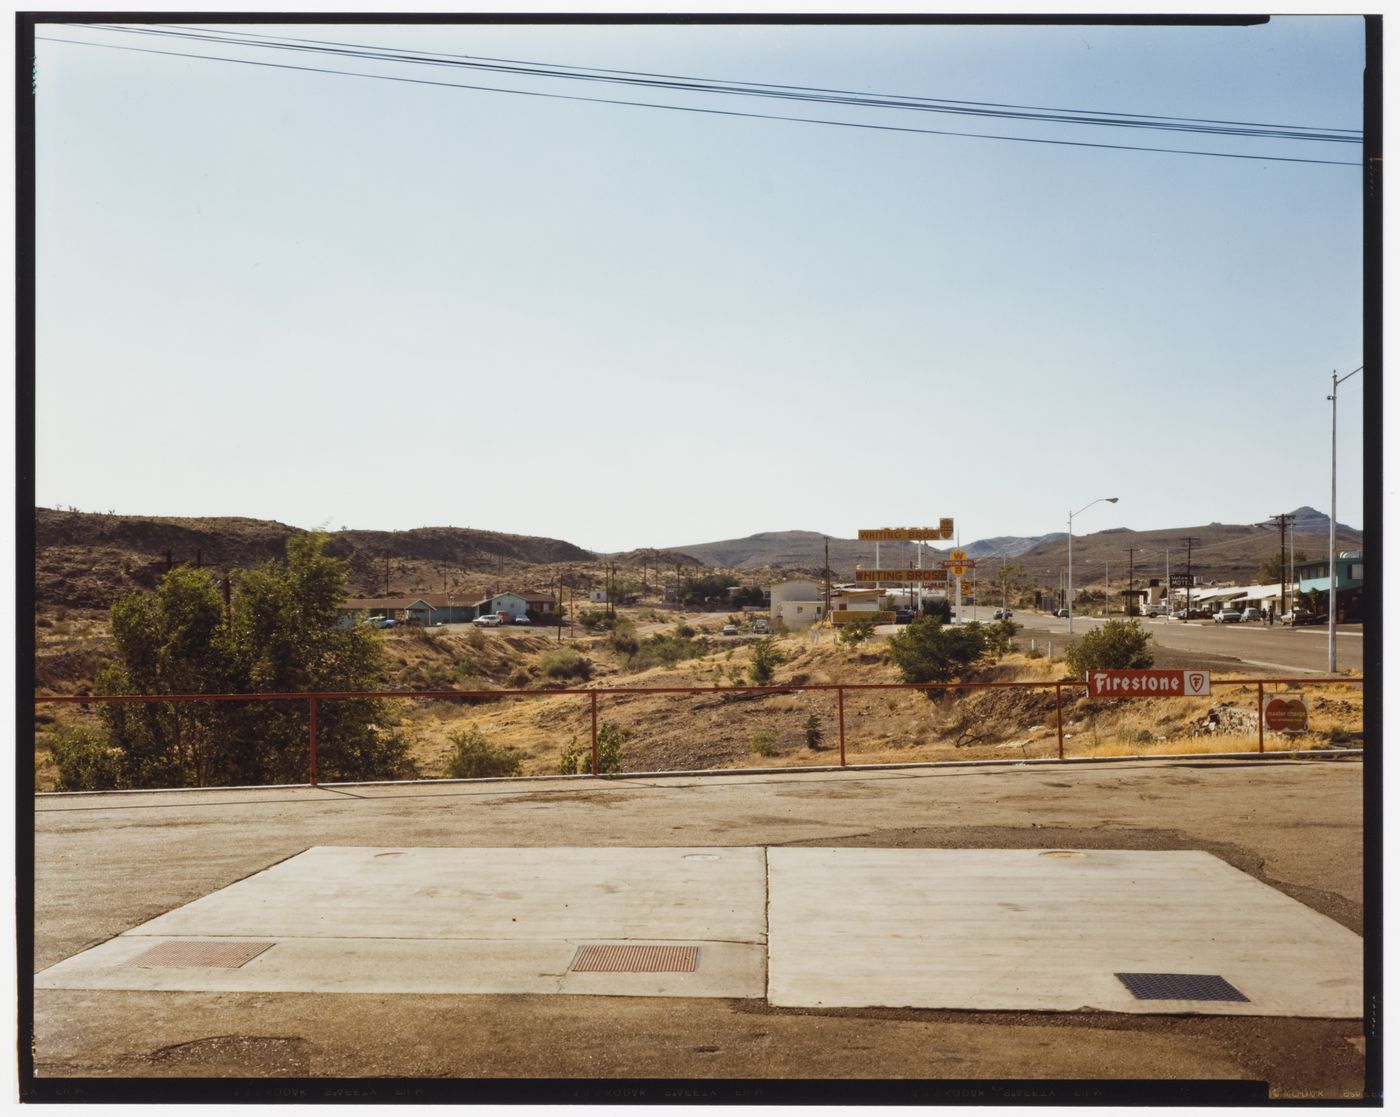 View of slab of concrete with landscape, U.S. 93, Kingman, Arizona